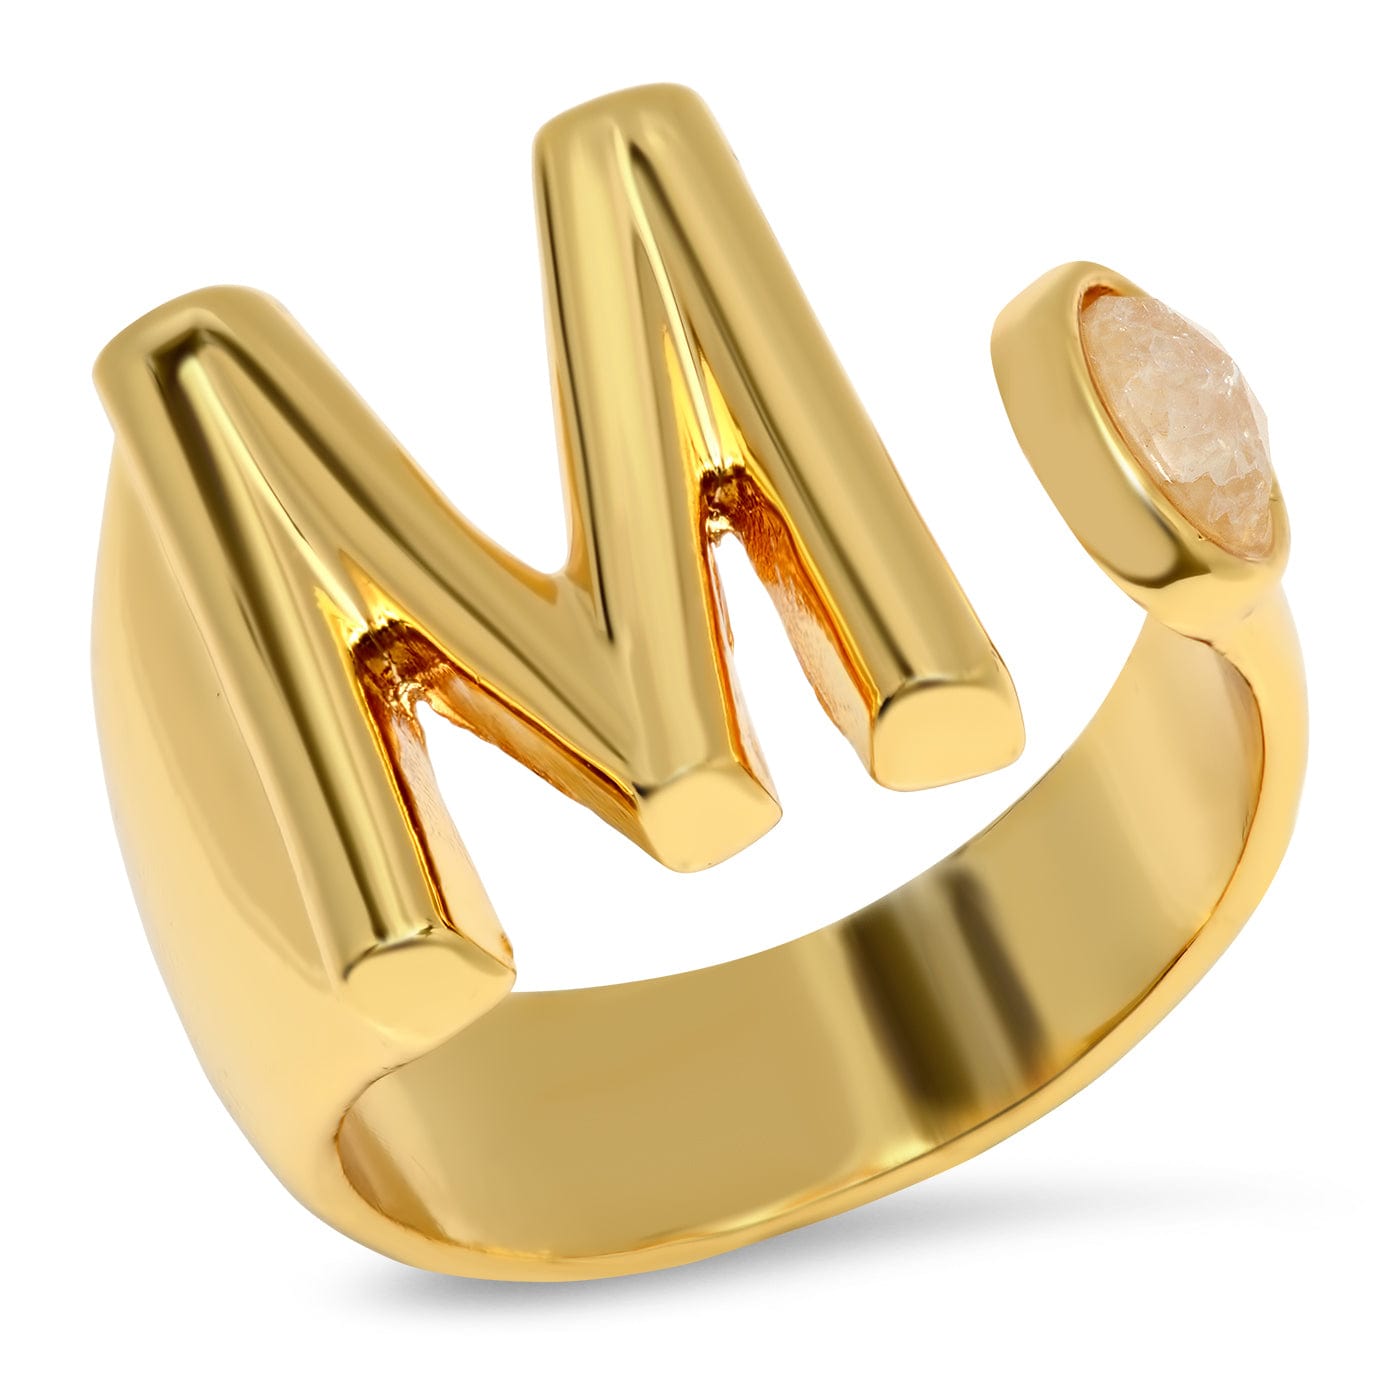 TAI JEWELRY Rings M Initial Wrap Ring